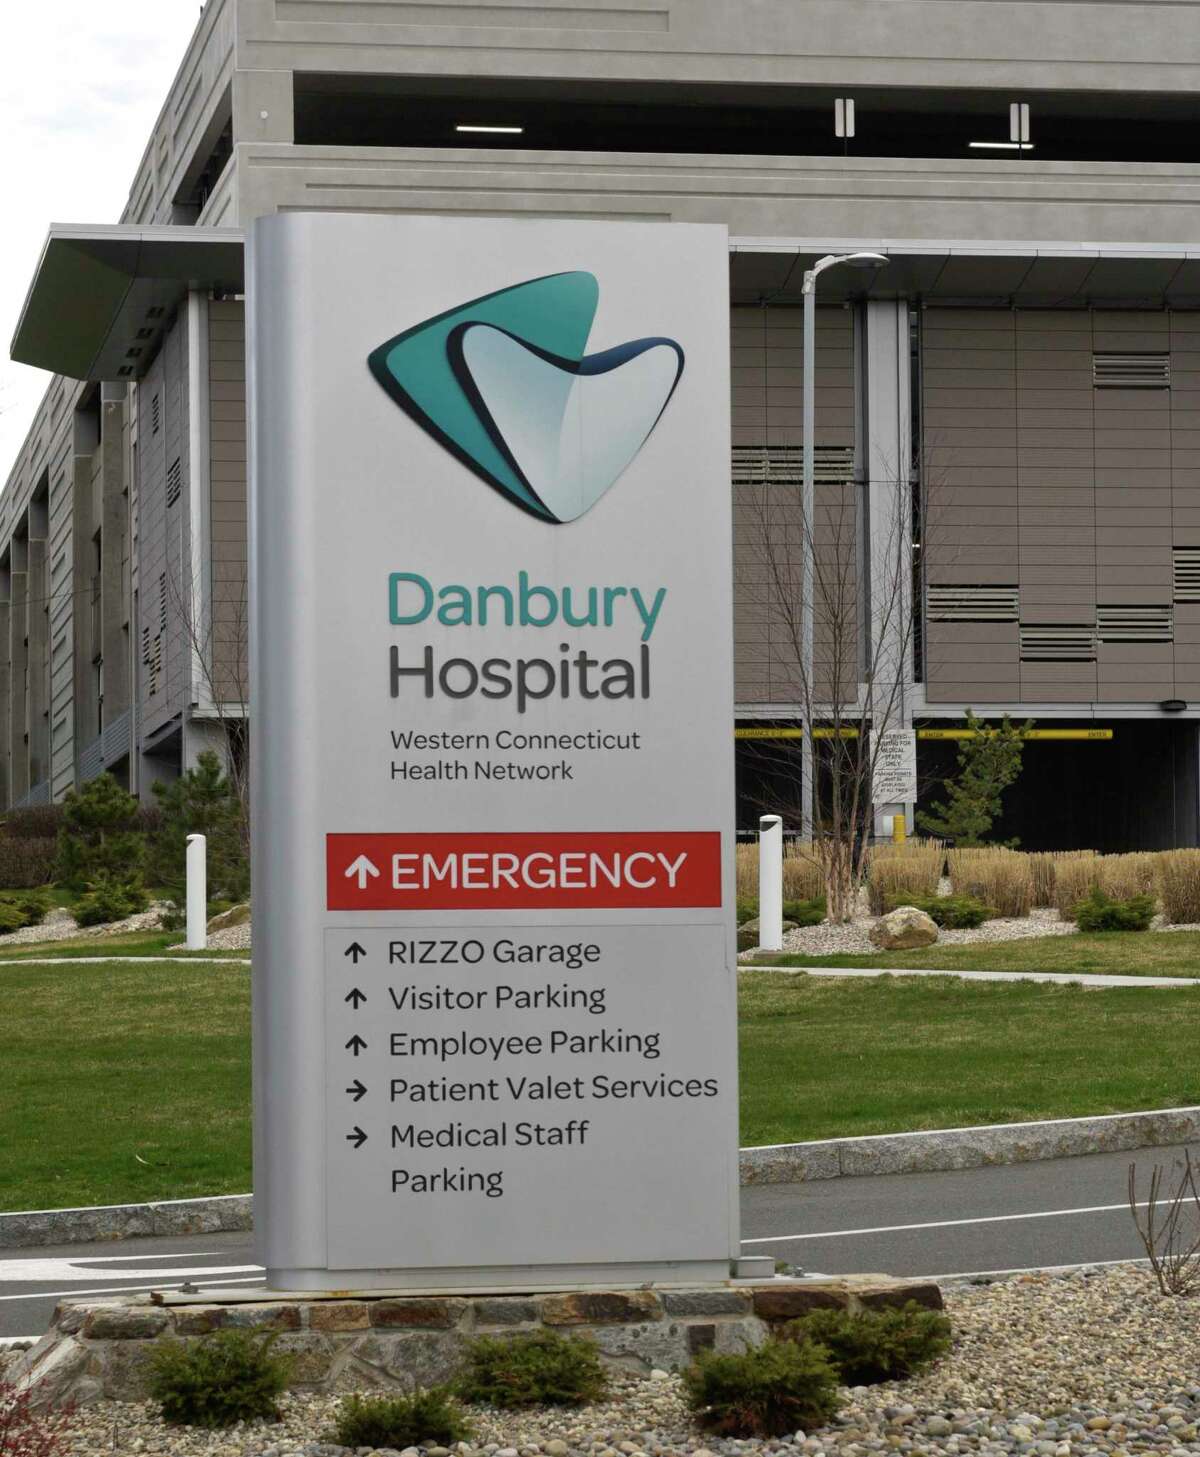 Danbury Hospital on April 7, 2020, in Danbury, Conn.